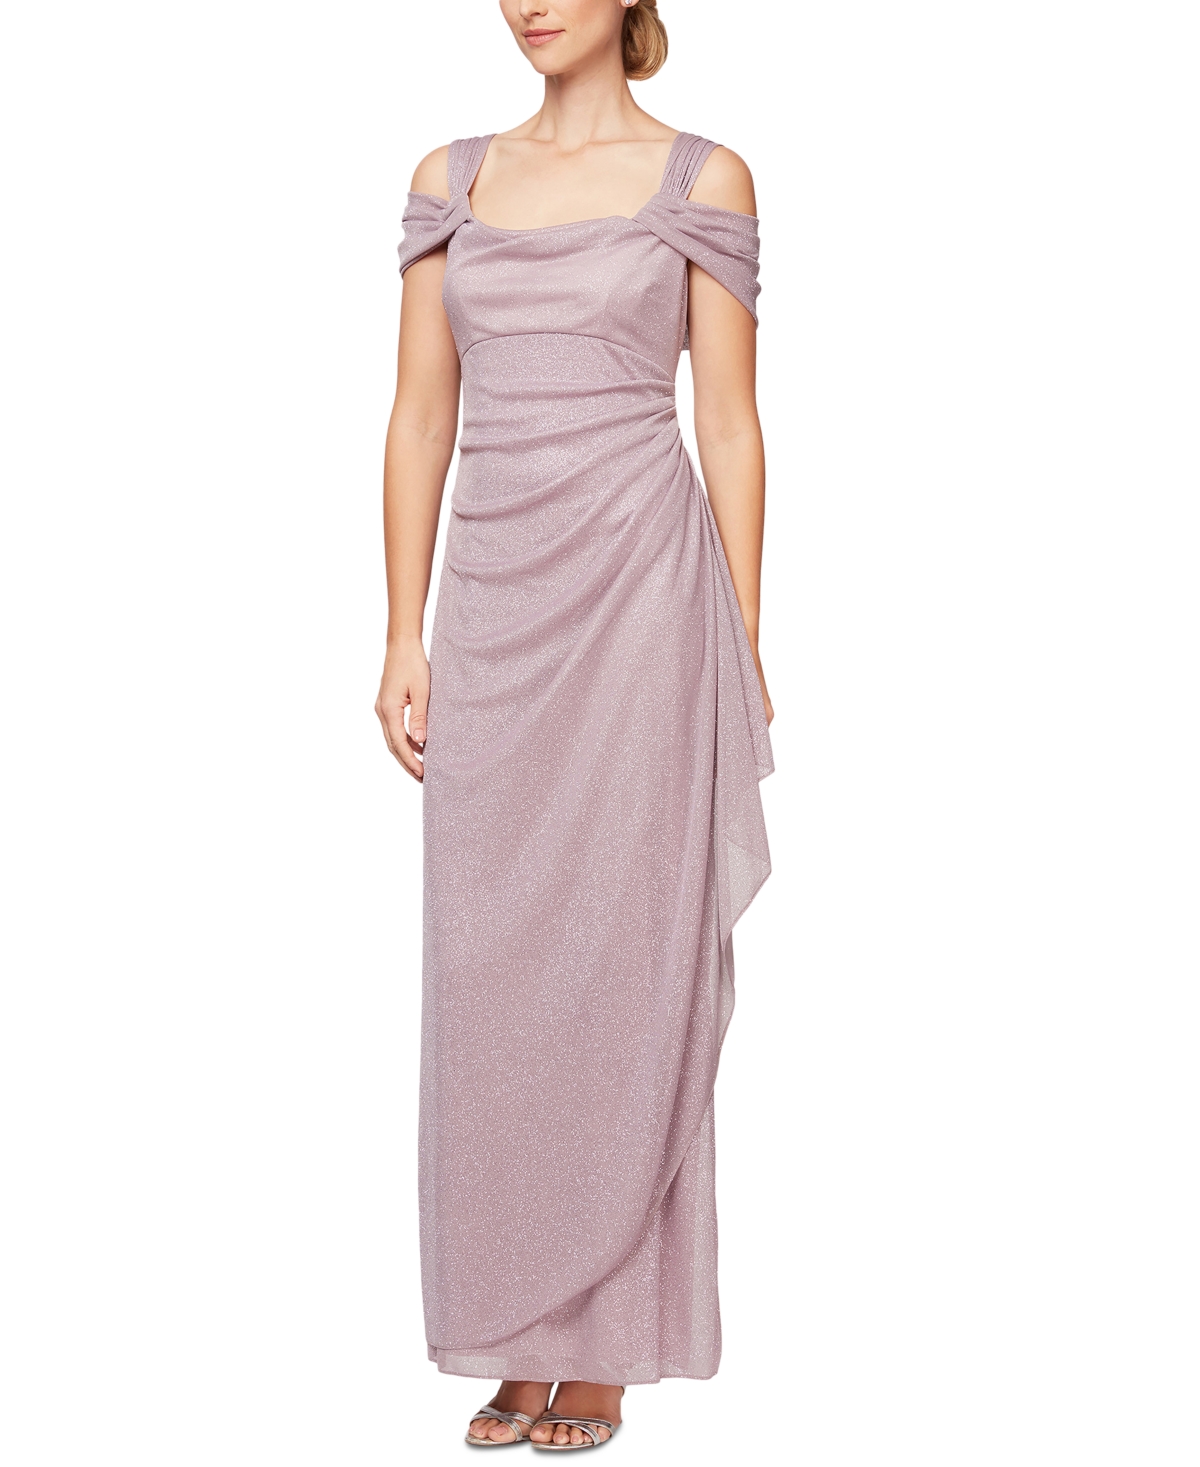 Cold-Shoulder Draped Metallic Gown - Mauve Pink